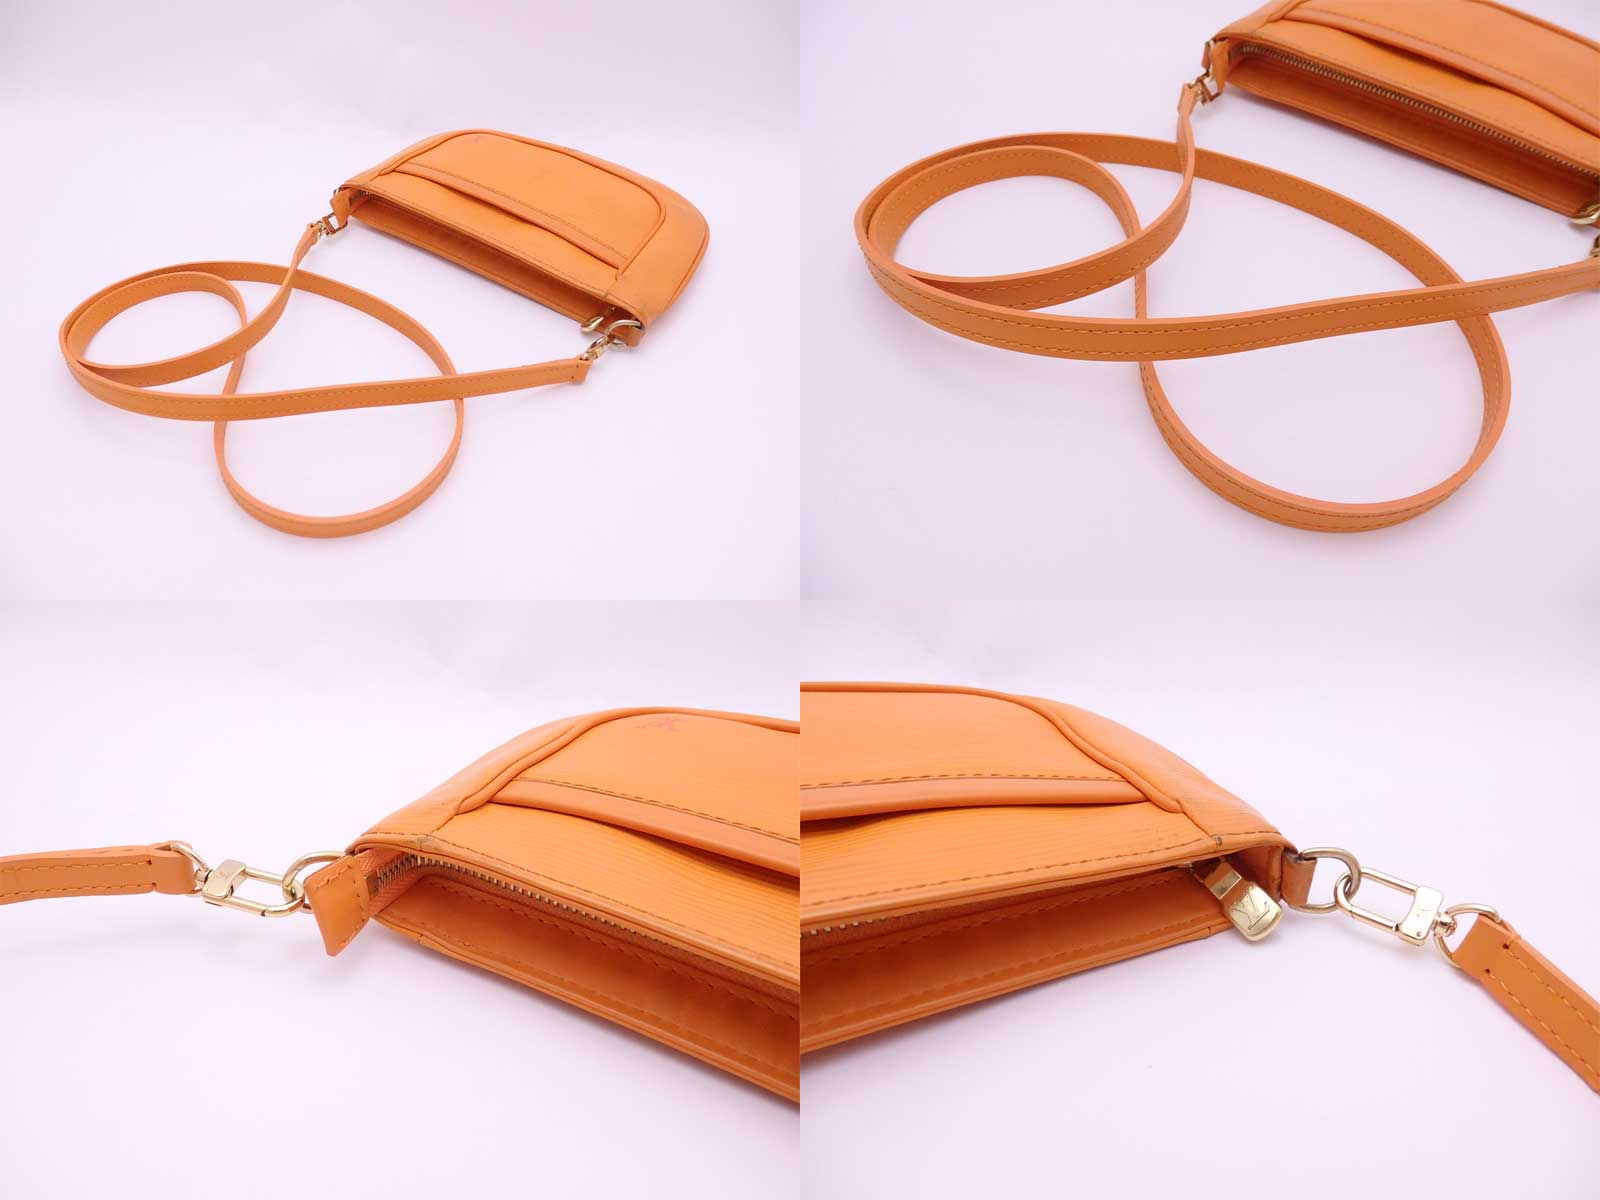 Auth Louis Vuitton Epi Sarvanga Crossbody Shoulder Bag Orange *USED* - e41954 | eBay